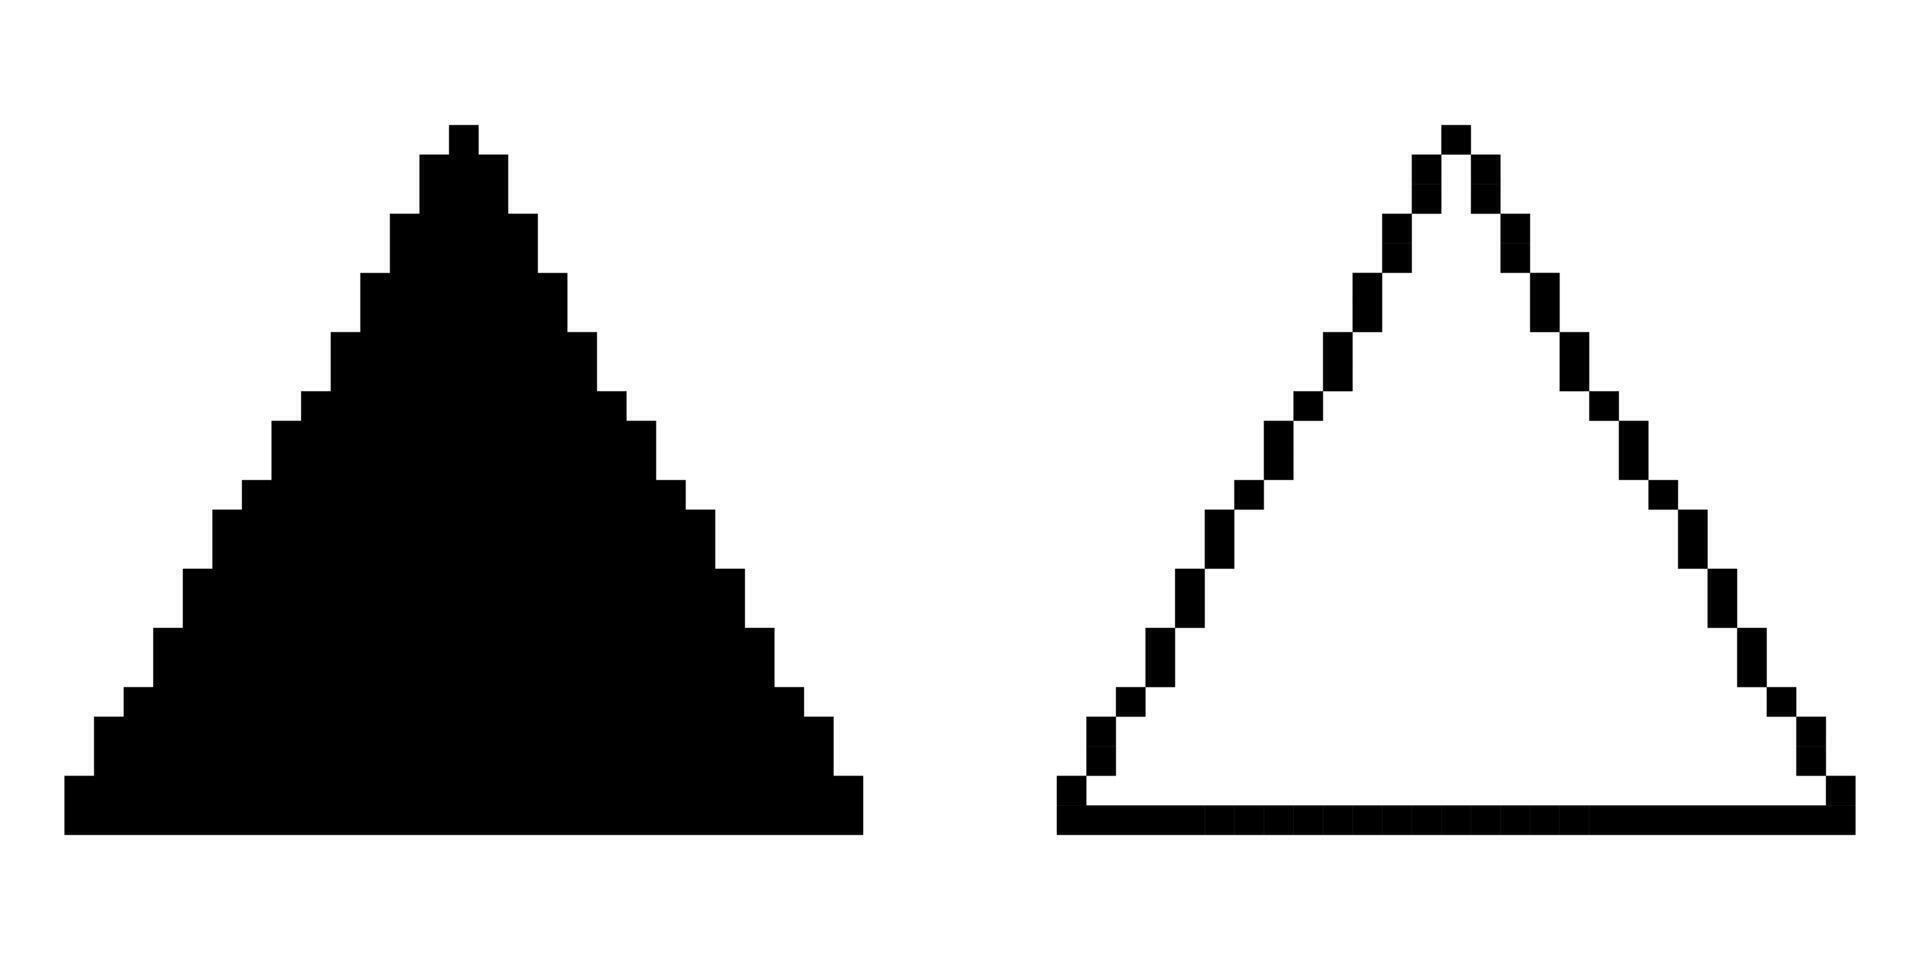 pixel art triangle shape set isolated on white background vector